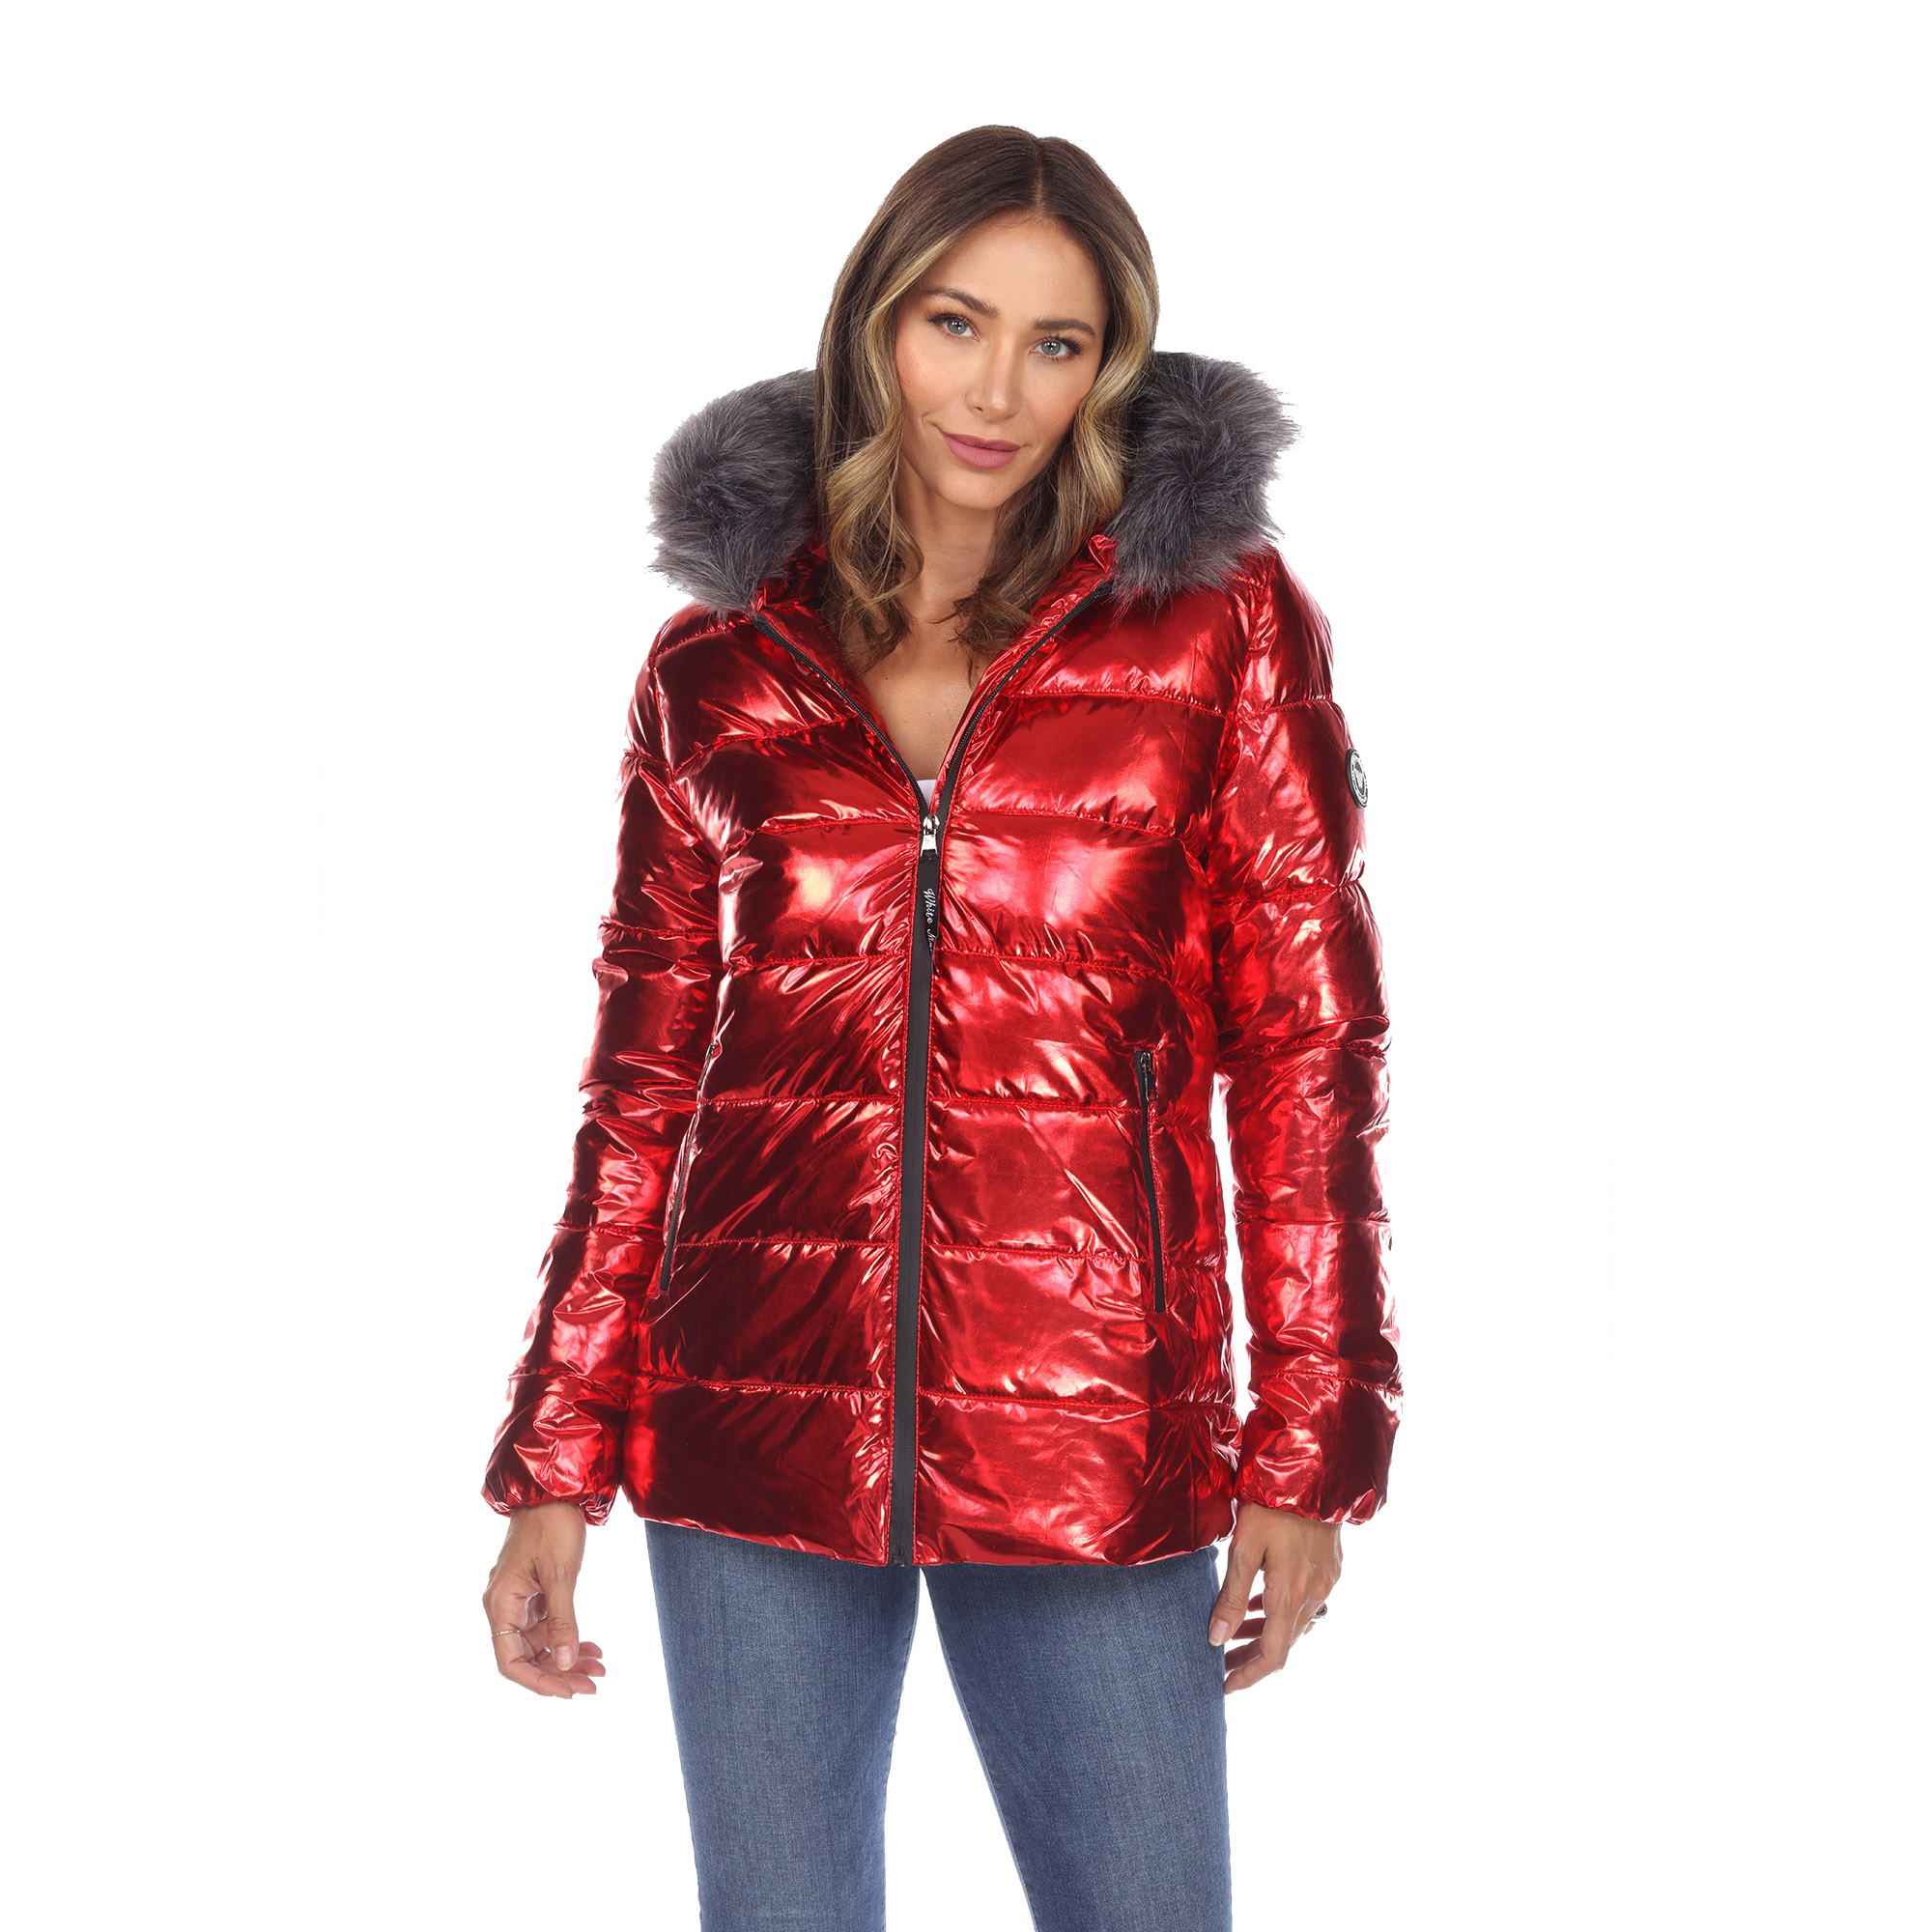 White Mark Womenâs Metallic Puffer Coat With Hoodie - Red, Medium